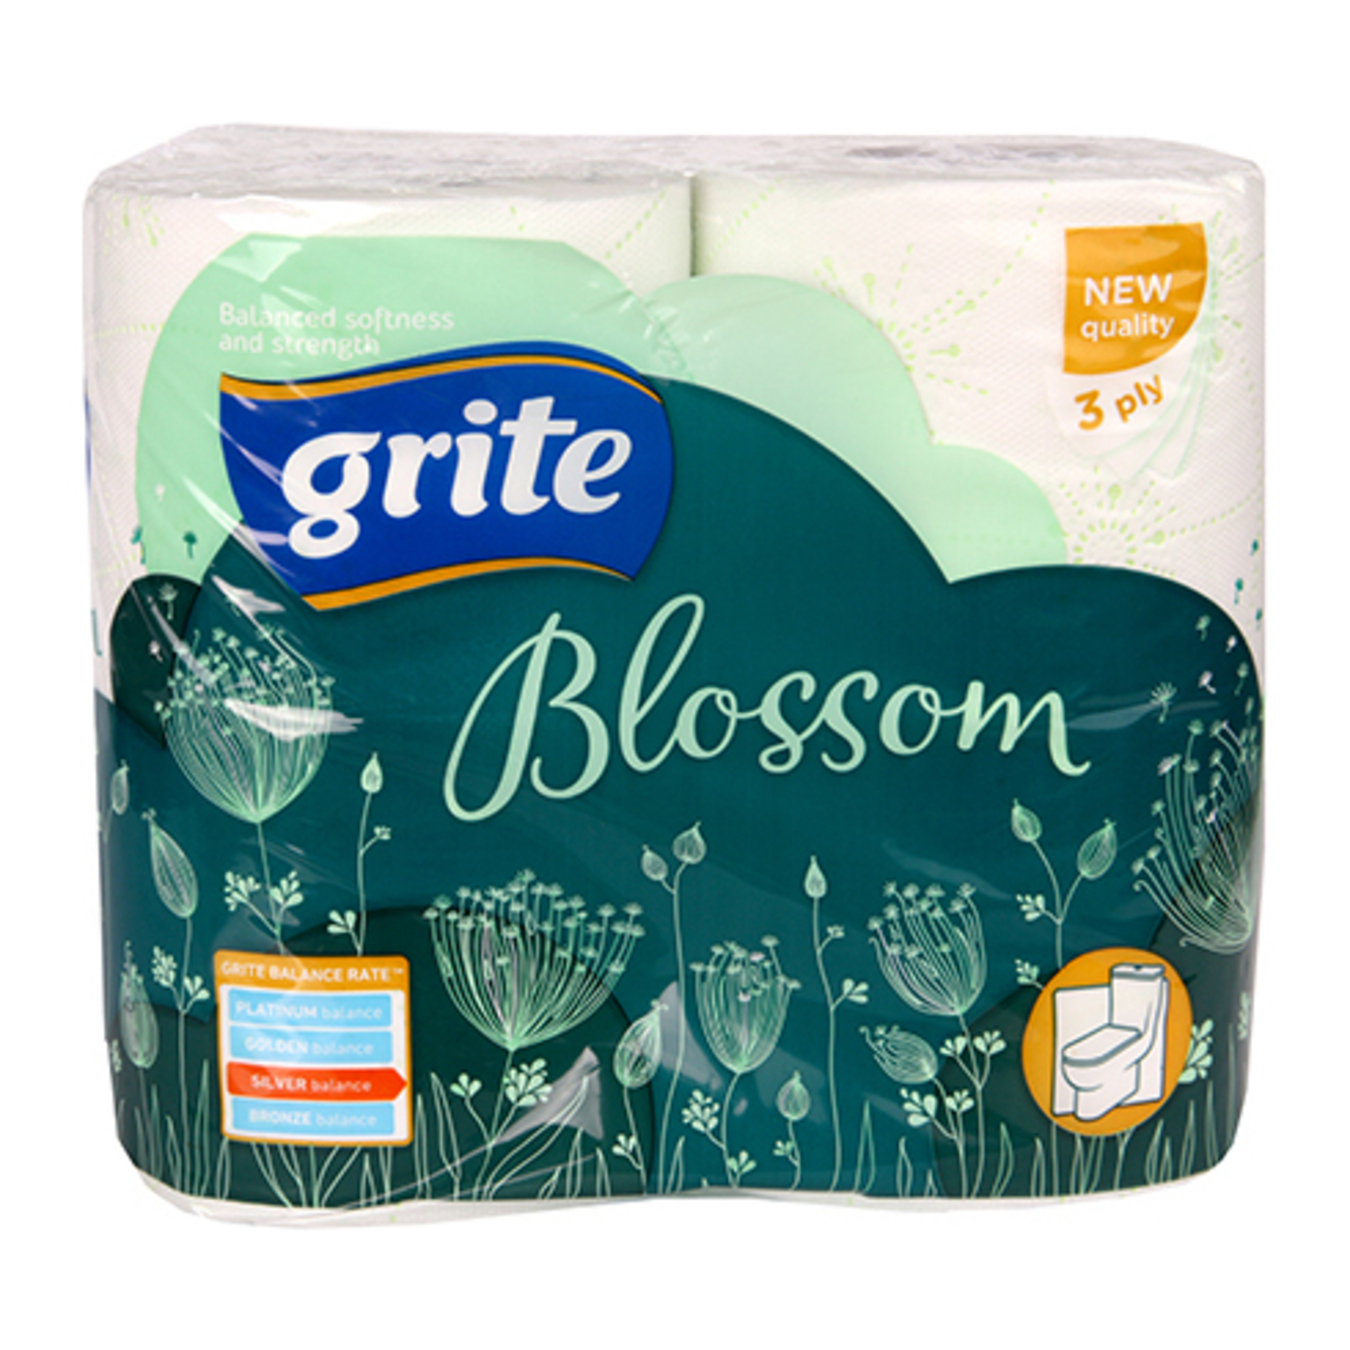 Grite Blossom Toilet Paper 4pcs